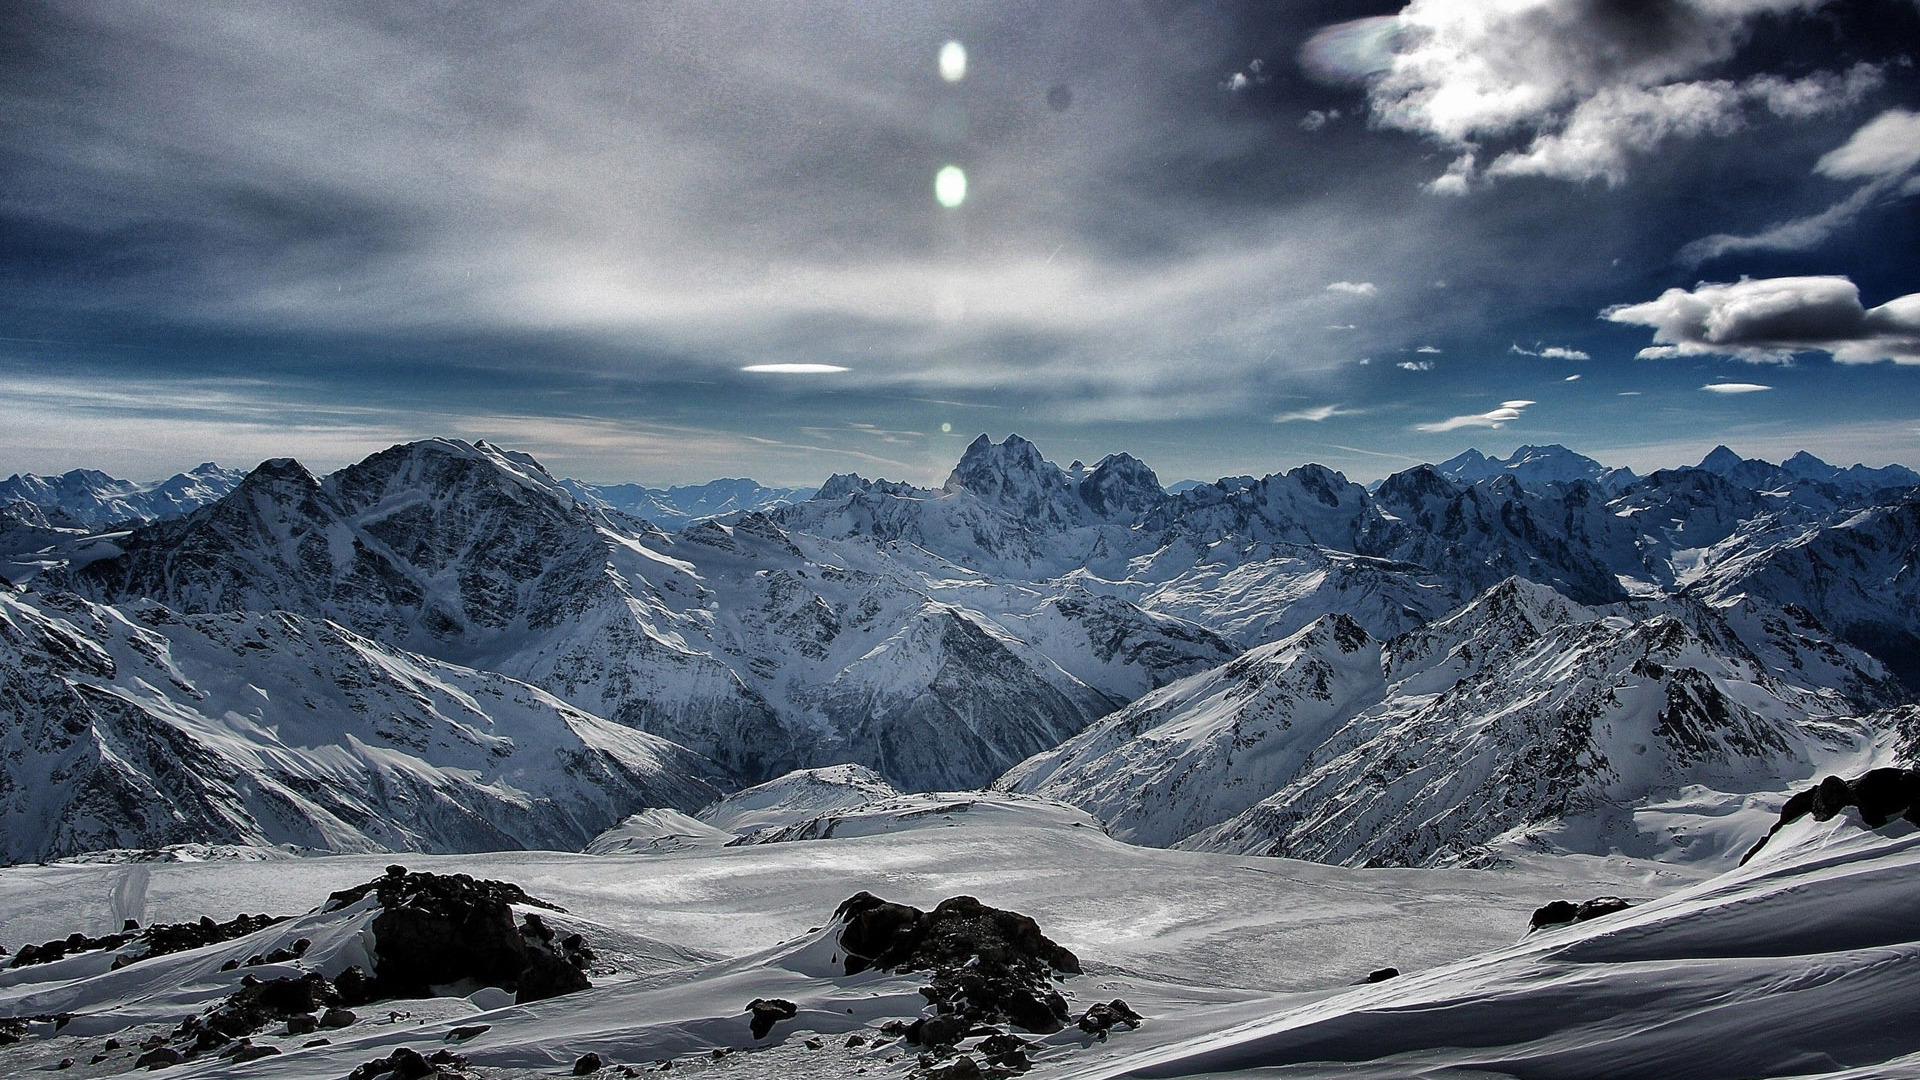 Winter Alpine Scenery Widescreen Wallpaper